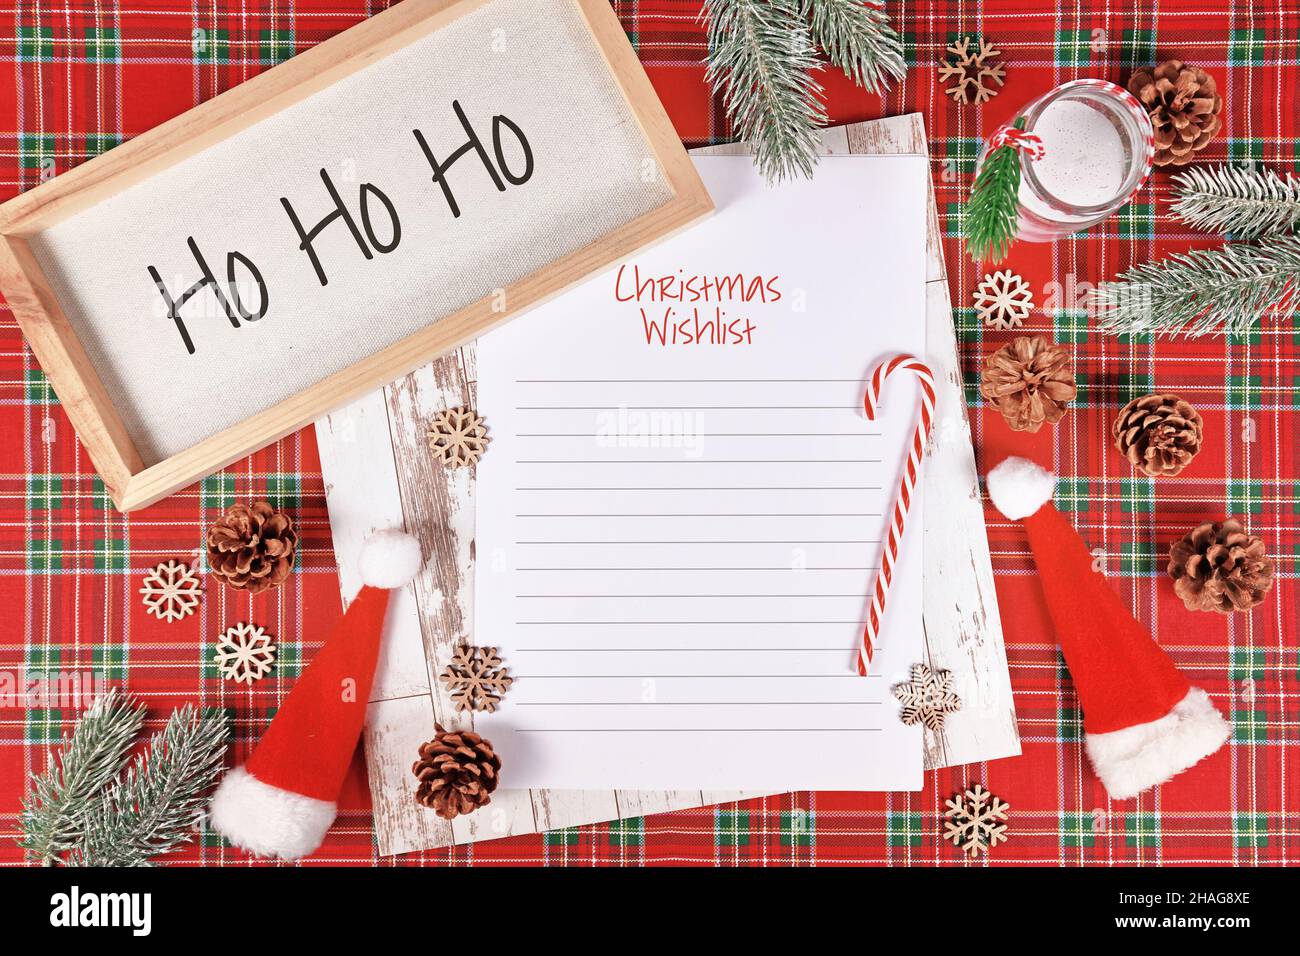 Christmas wish list surrounded by seasonal decoration Stock Photo